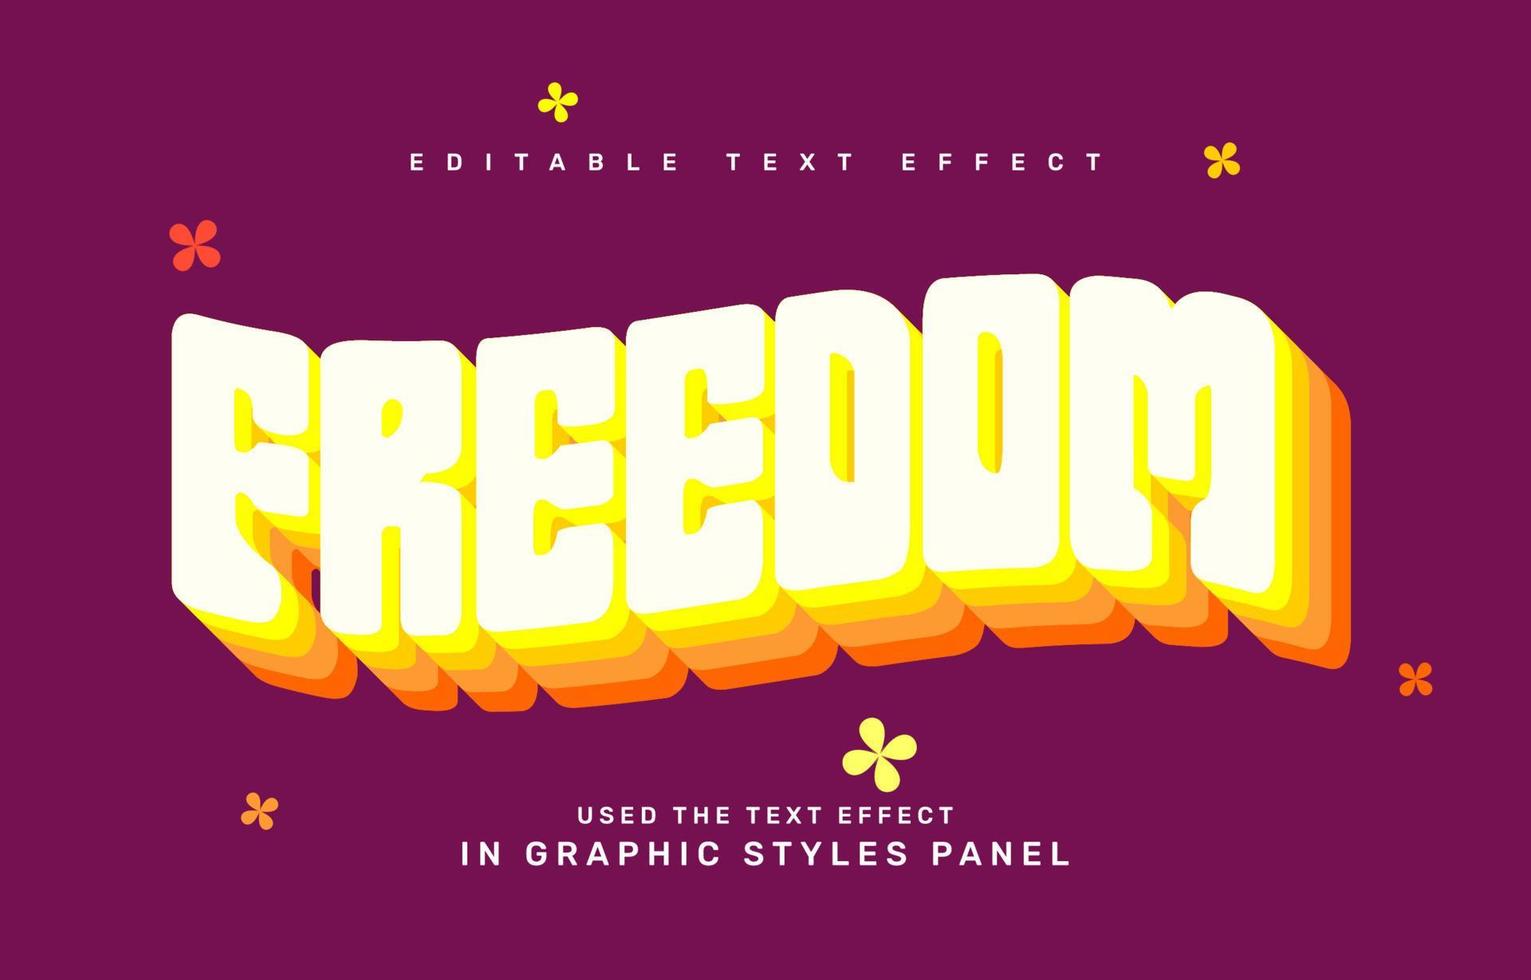 Freedom hippie editable text effect template vector